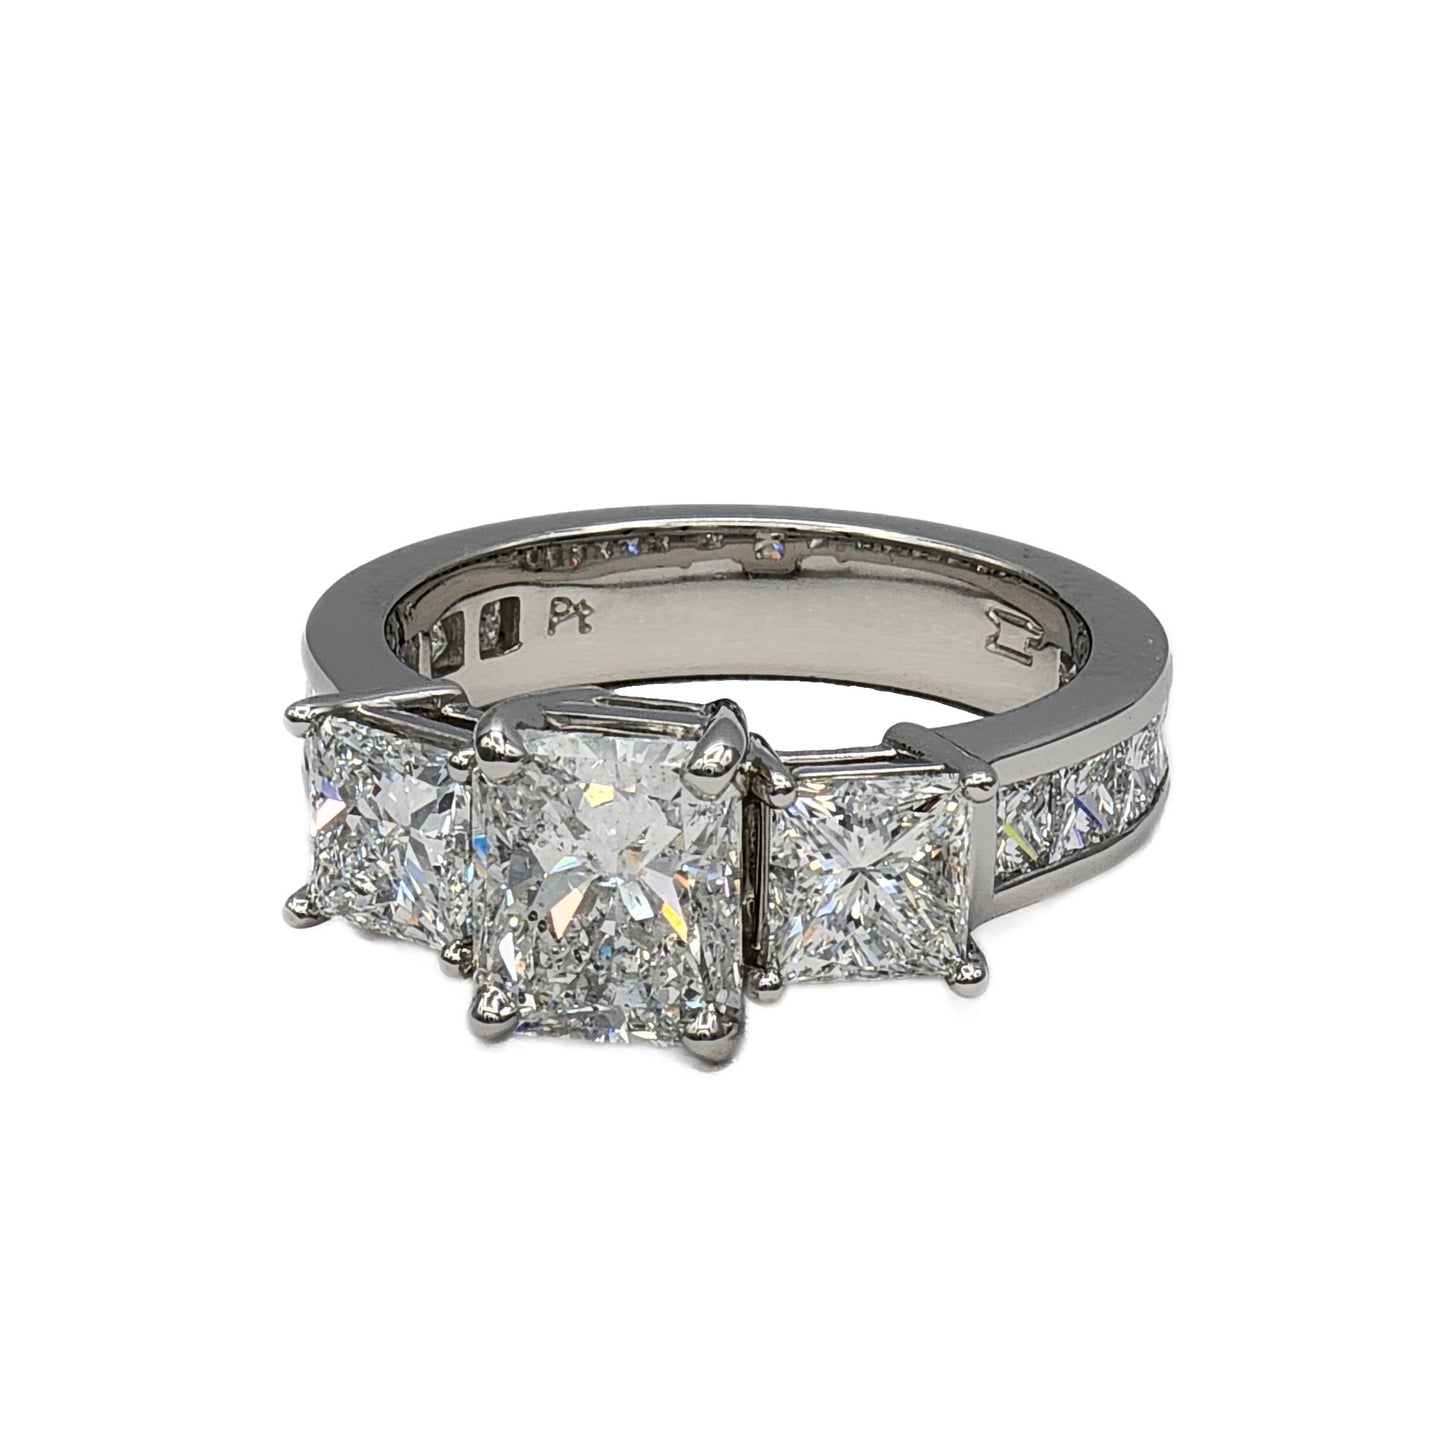 1.78 Carat F/I1 Radiant Cut Diamond and 14=2.67 Diamond Ring in Platinum, GIA Report